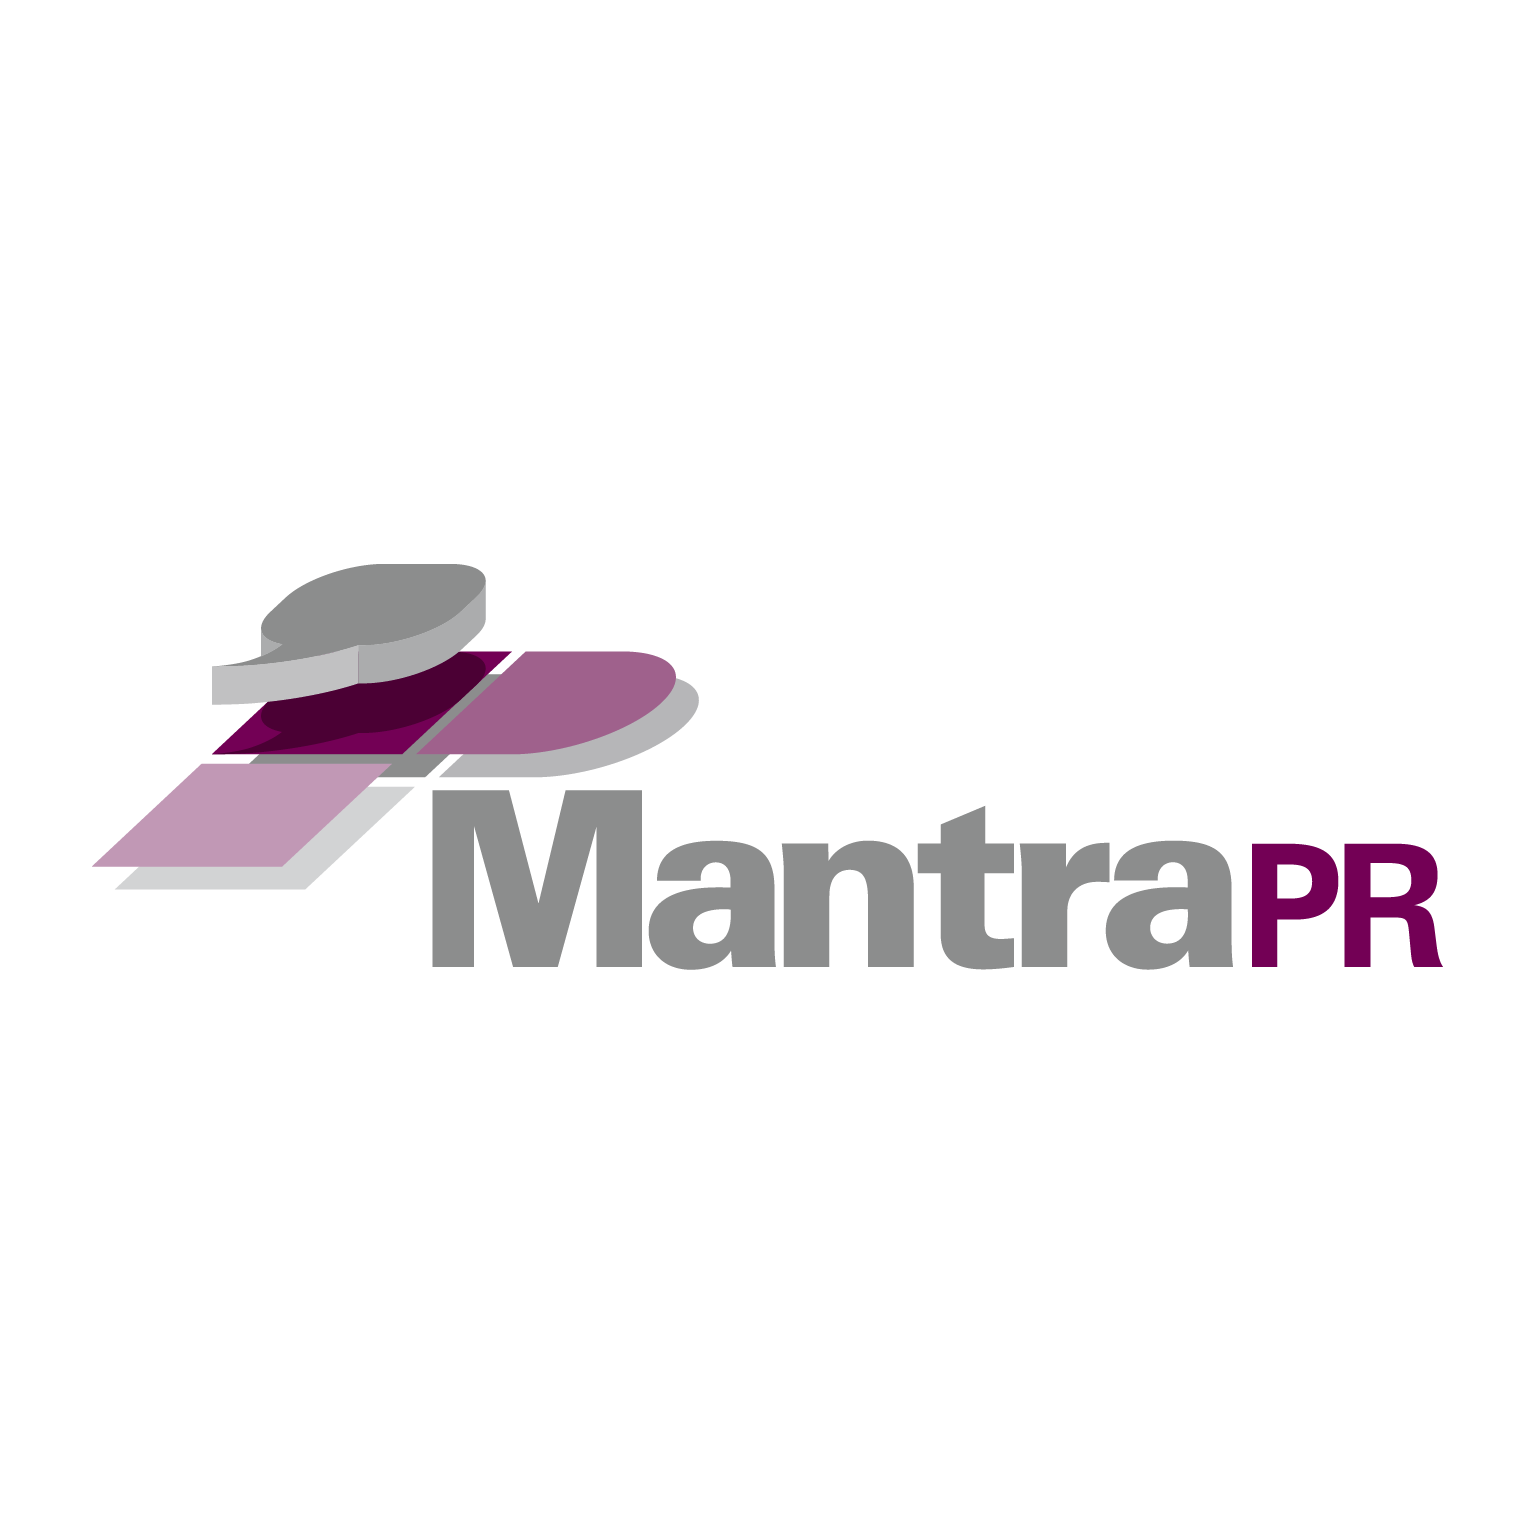 Mantra PR Logo WShadow.png